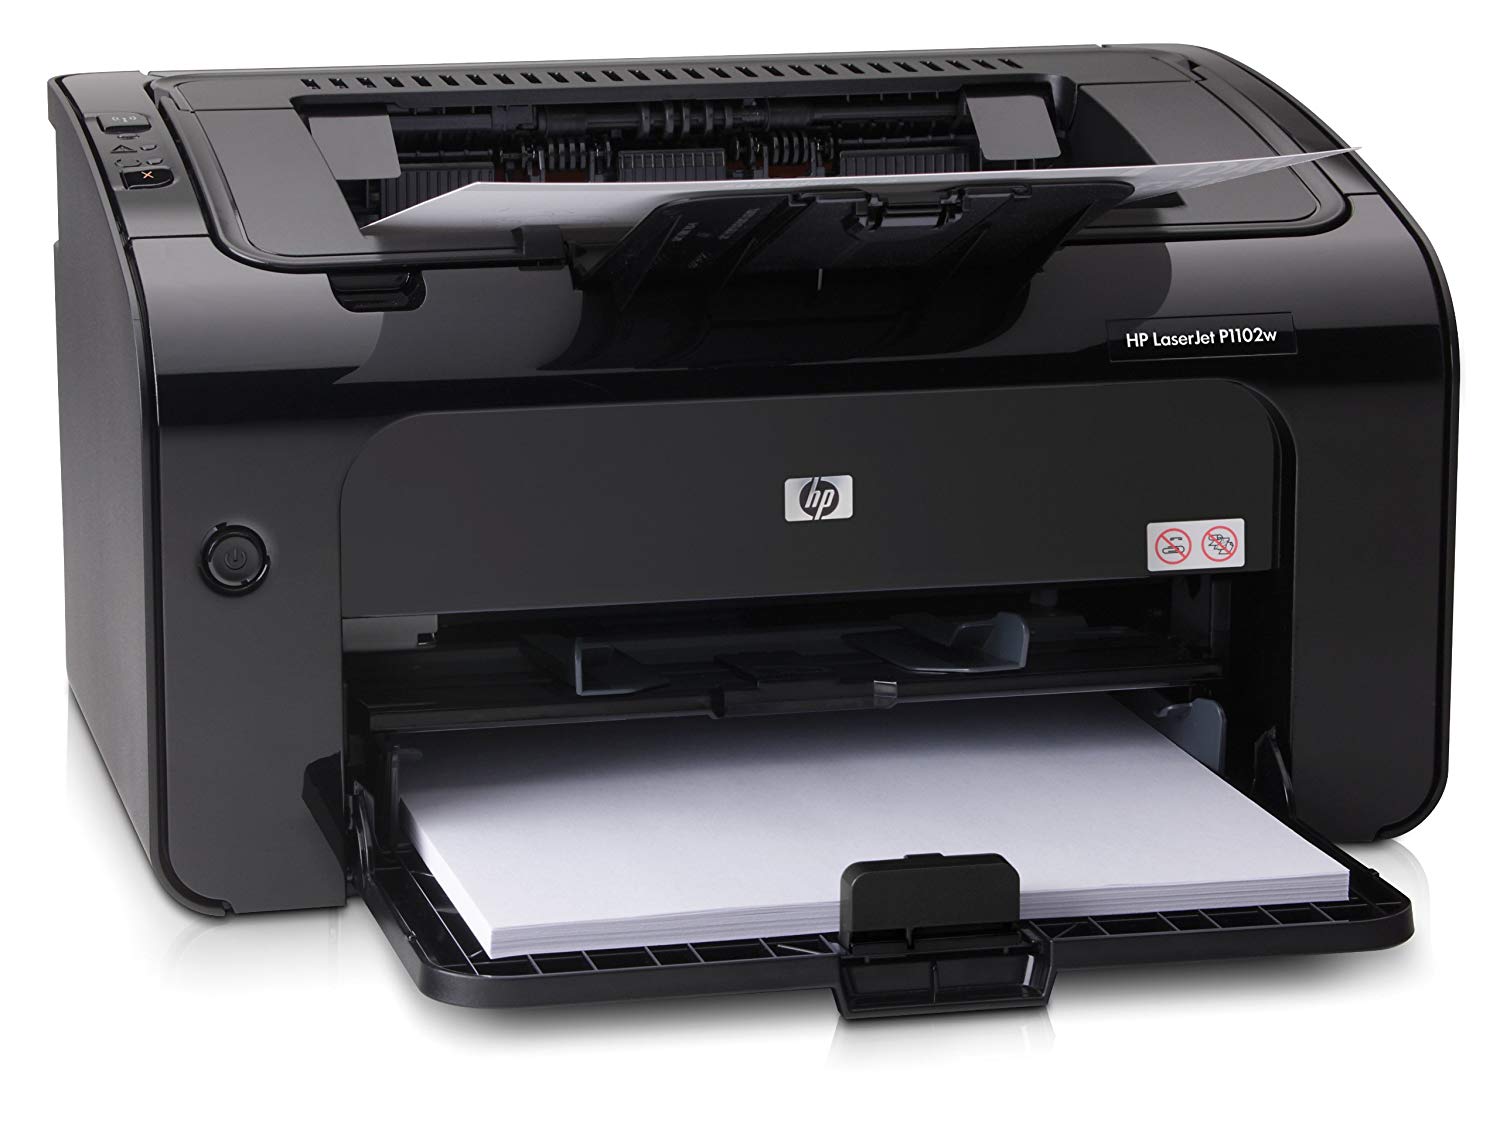 HP P1102w Printer Driver | Drivers